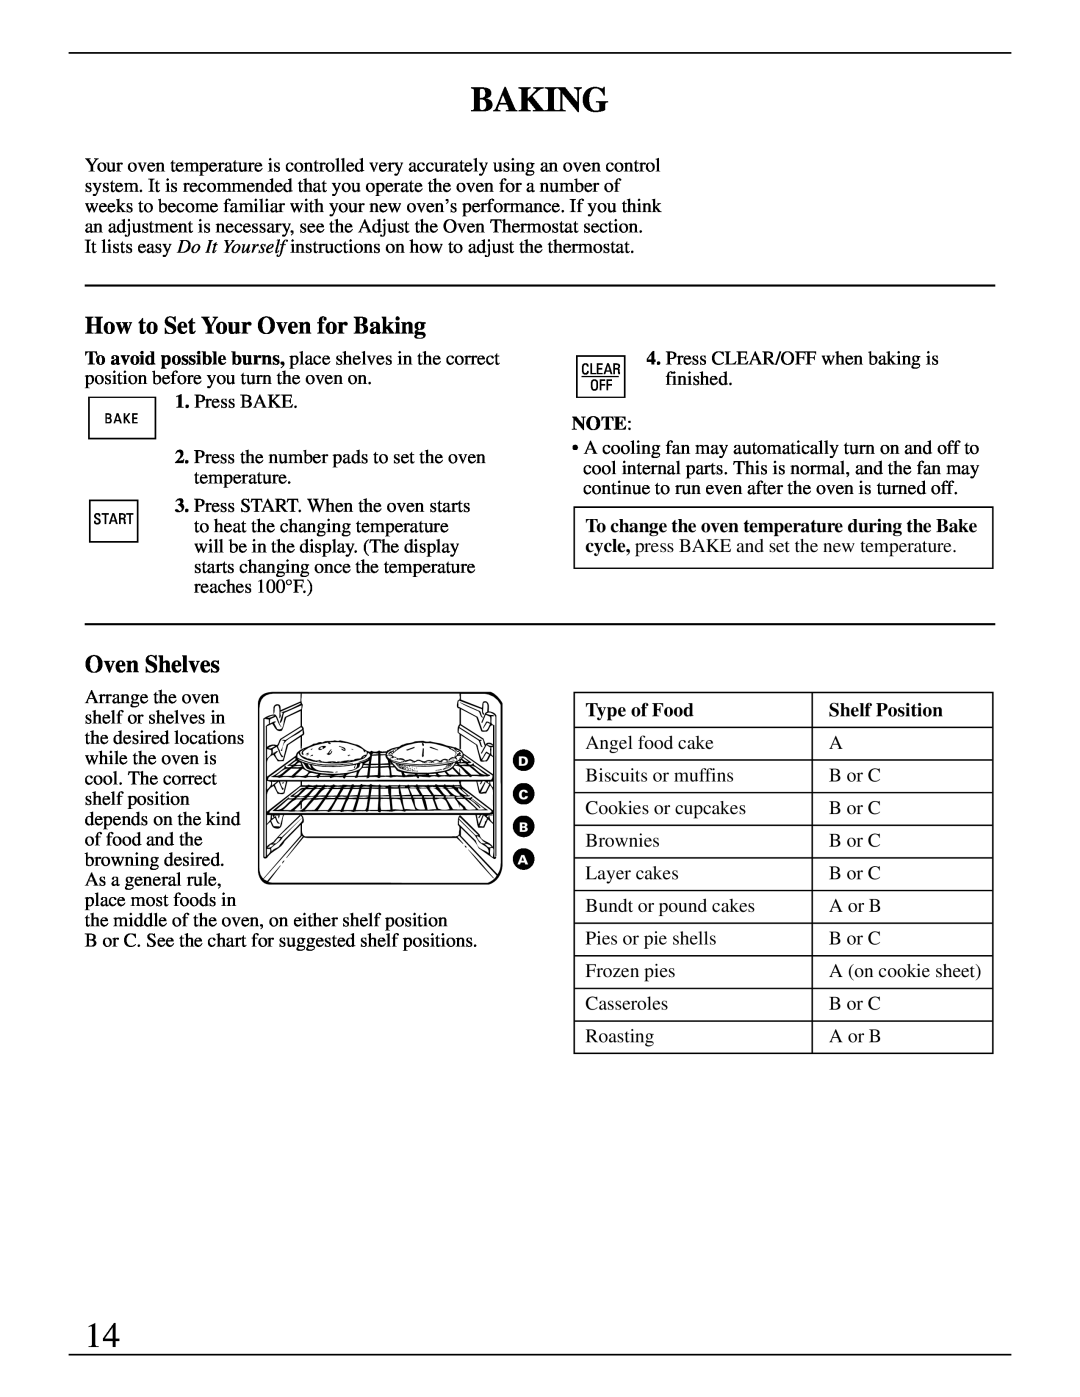 GE Monogram ZEK735 manual How to Set Your Oven for Baking, Oven Shelves 